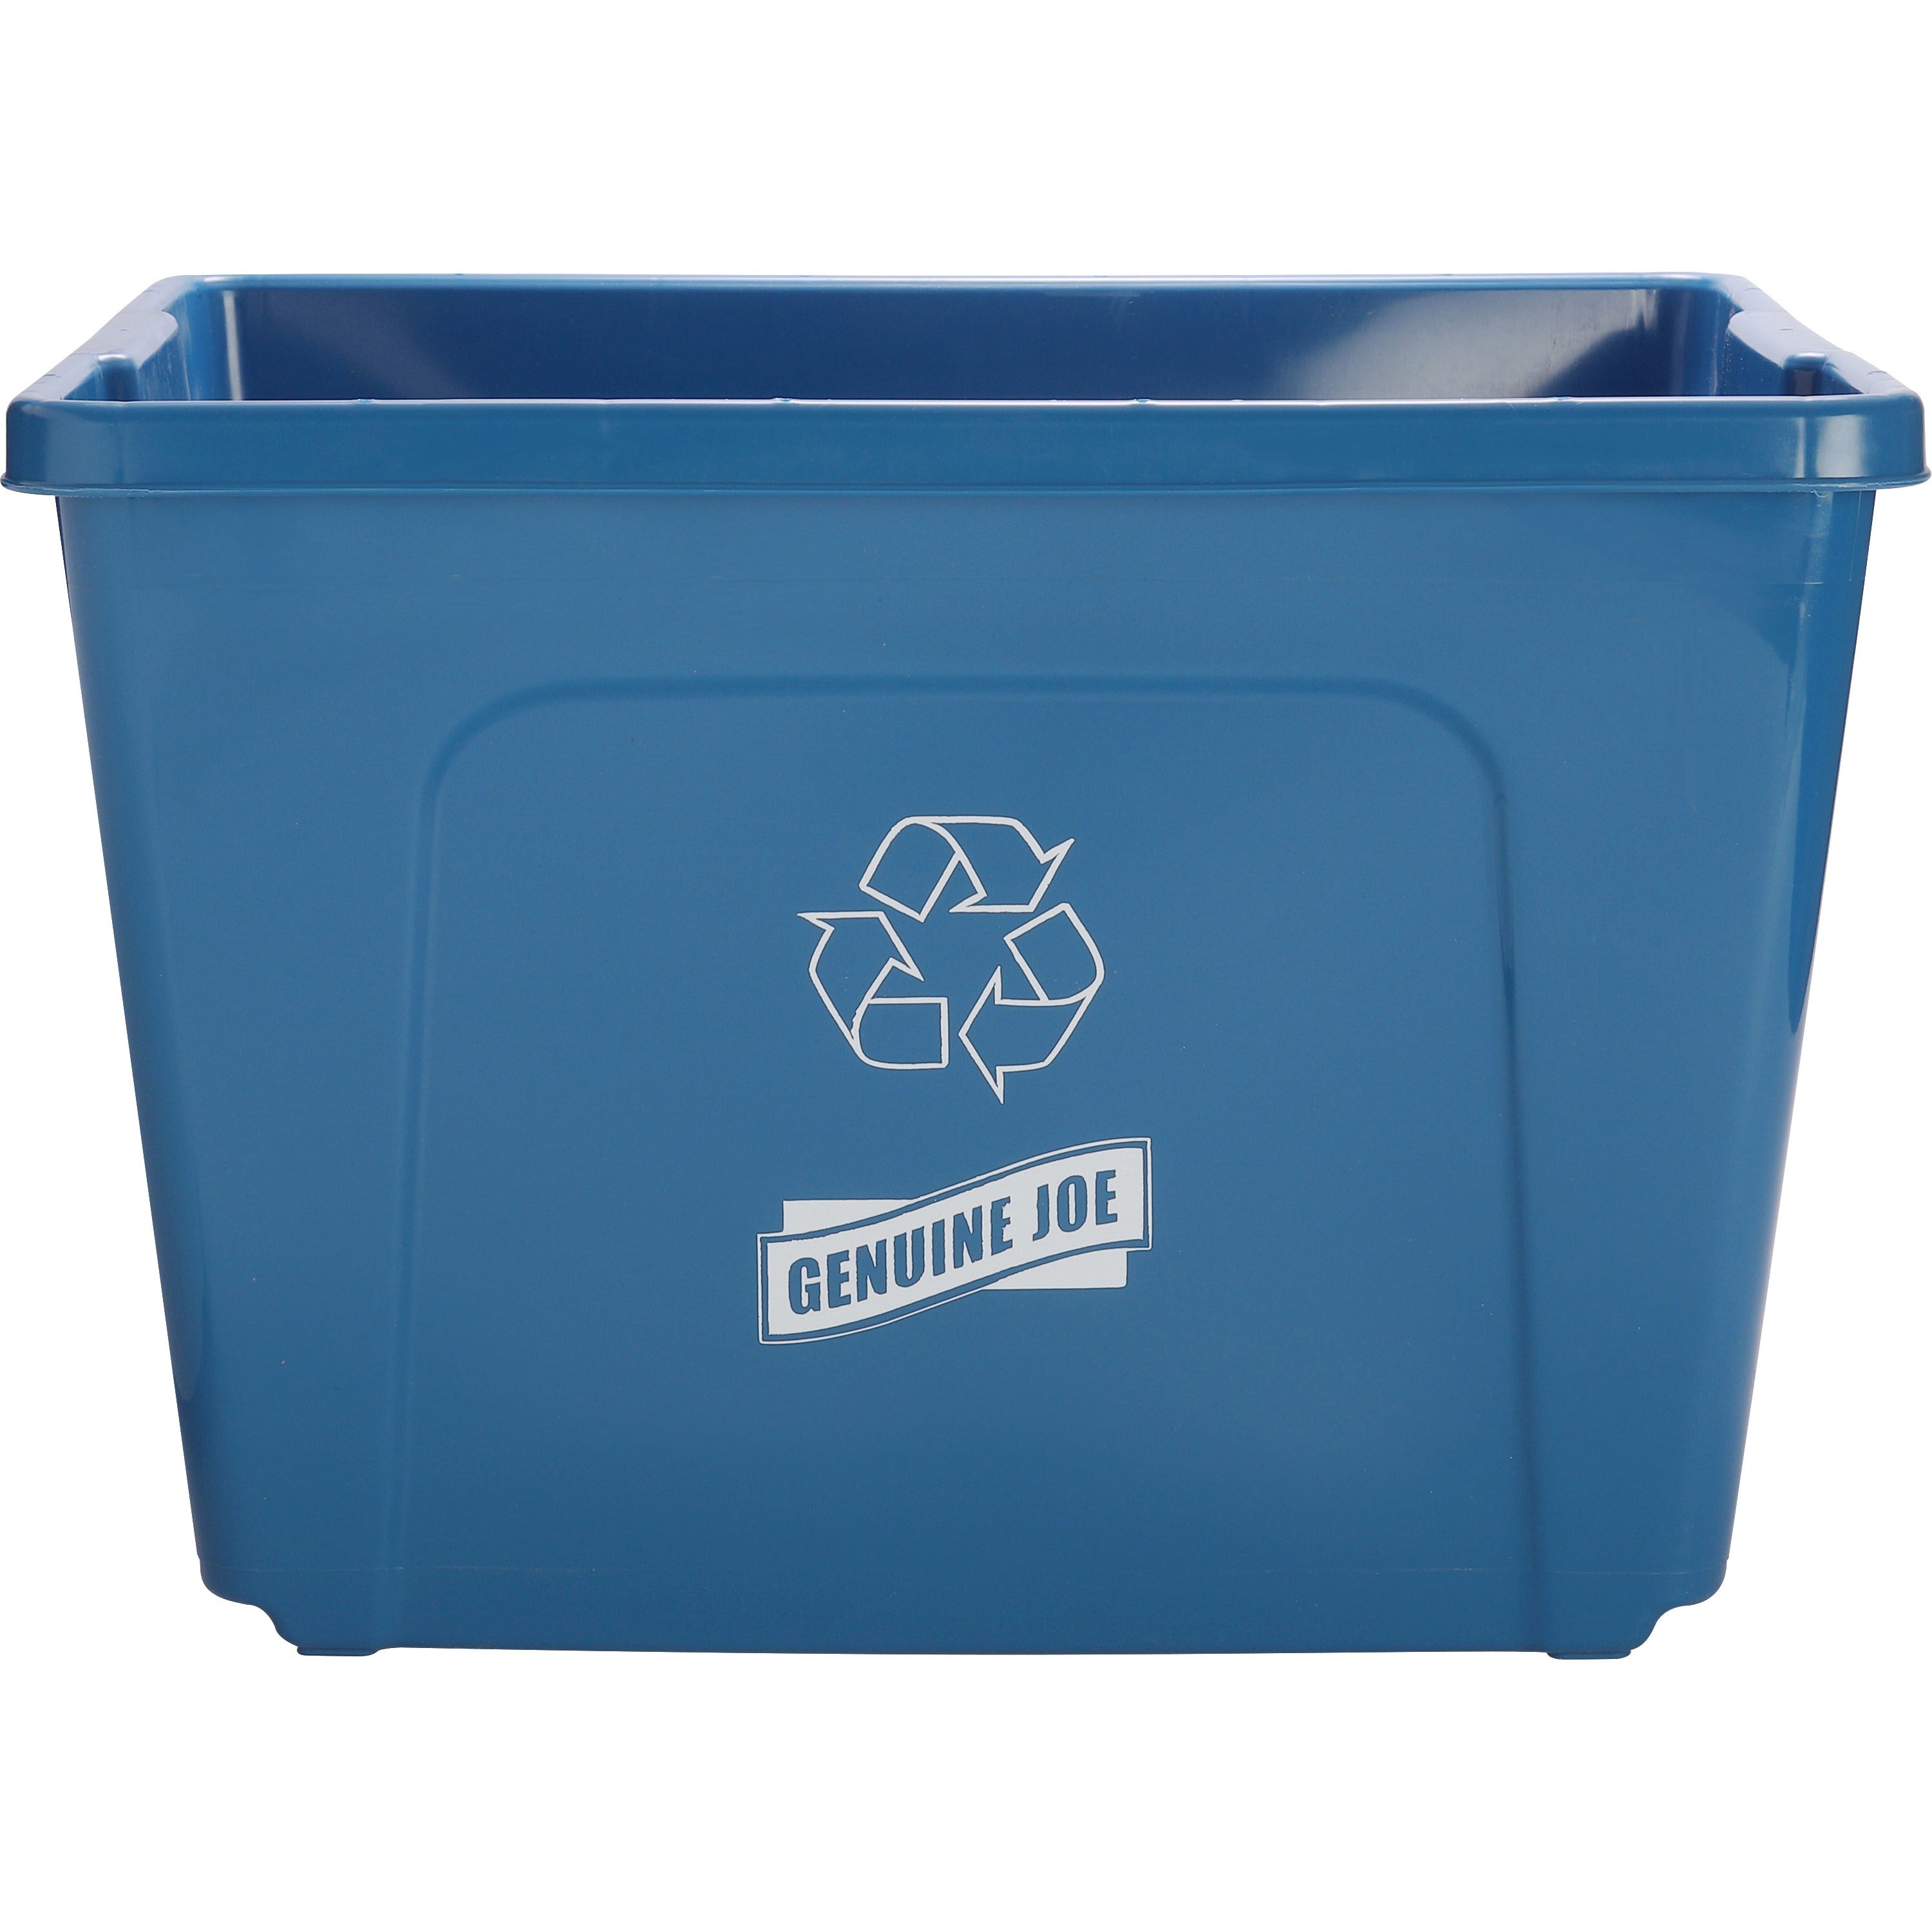 Genuine Joe 14-Gallon Recycling Bin - 14 gal Capacity - Rectangular - Durable, Lightweight - 14.5" Height x 19.5" Width x 15.4" Depth - Plastic - Blue - 1 Each - 